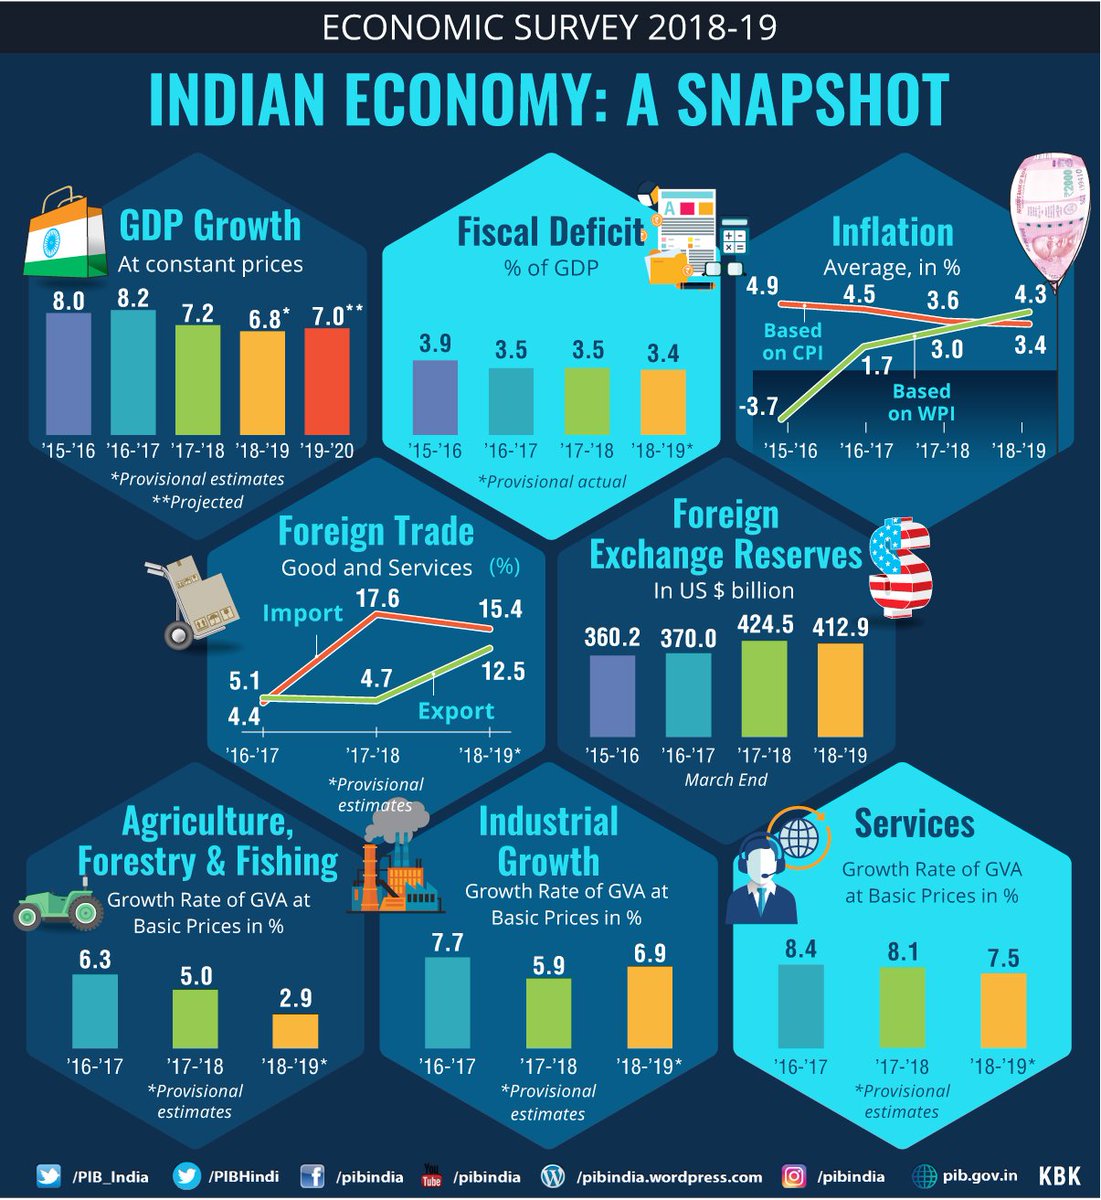 Pib India A Snapshot Of Indian Economy From The Economicsurvey19 Ecosurvey19 Economy5trillion Also Check Out For Details T Co Avusgzyoos Pmoindia Nsitharaman Finminindia T Co Aehxpu74og